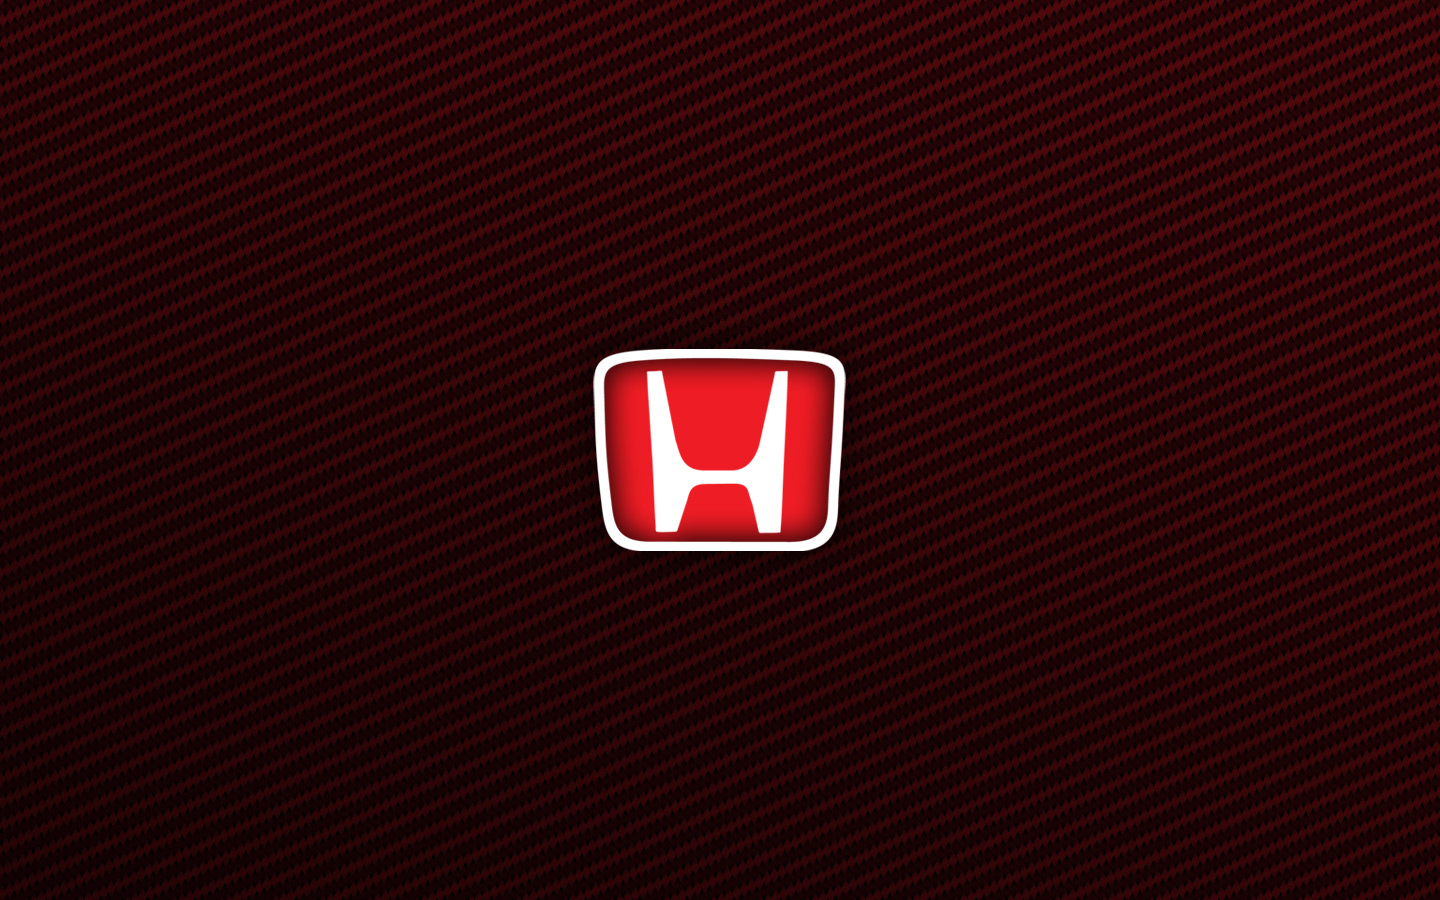 Red Honda Emblem Wallpaper Images Pictures   Becuo